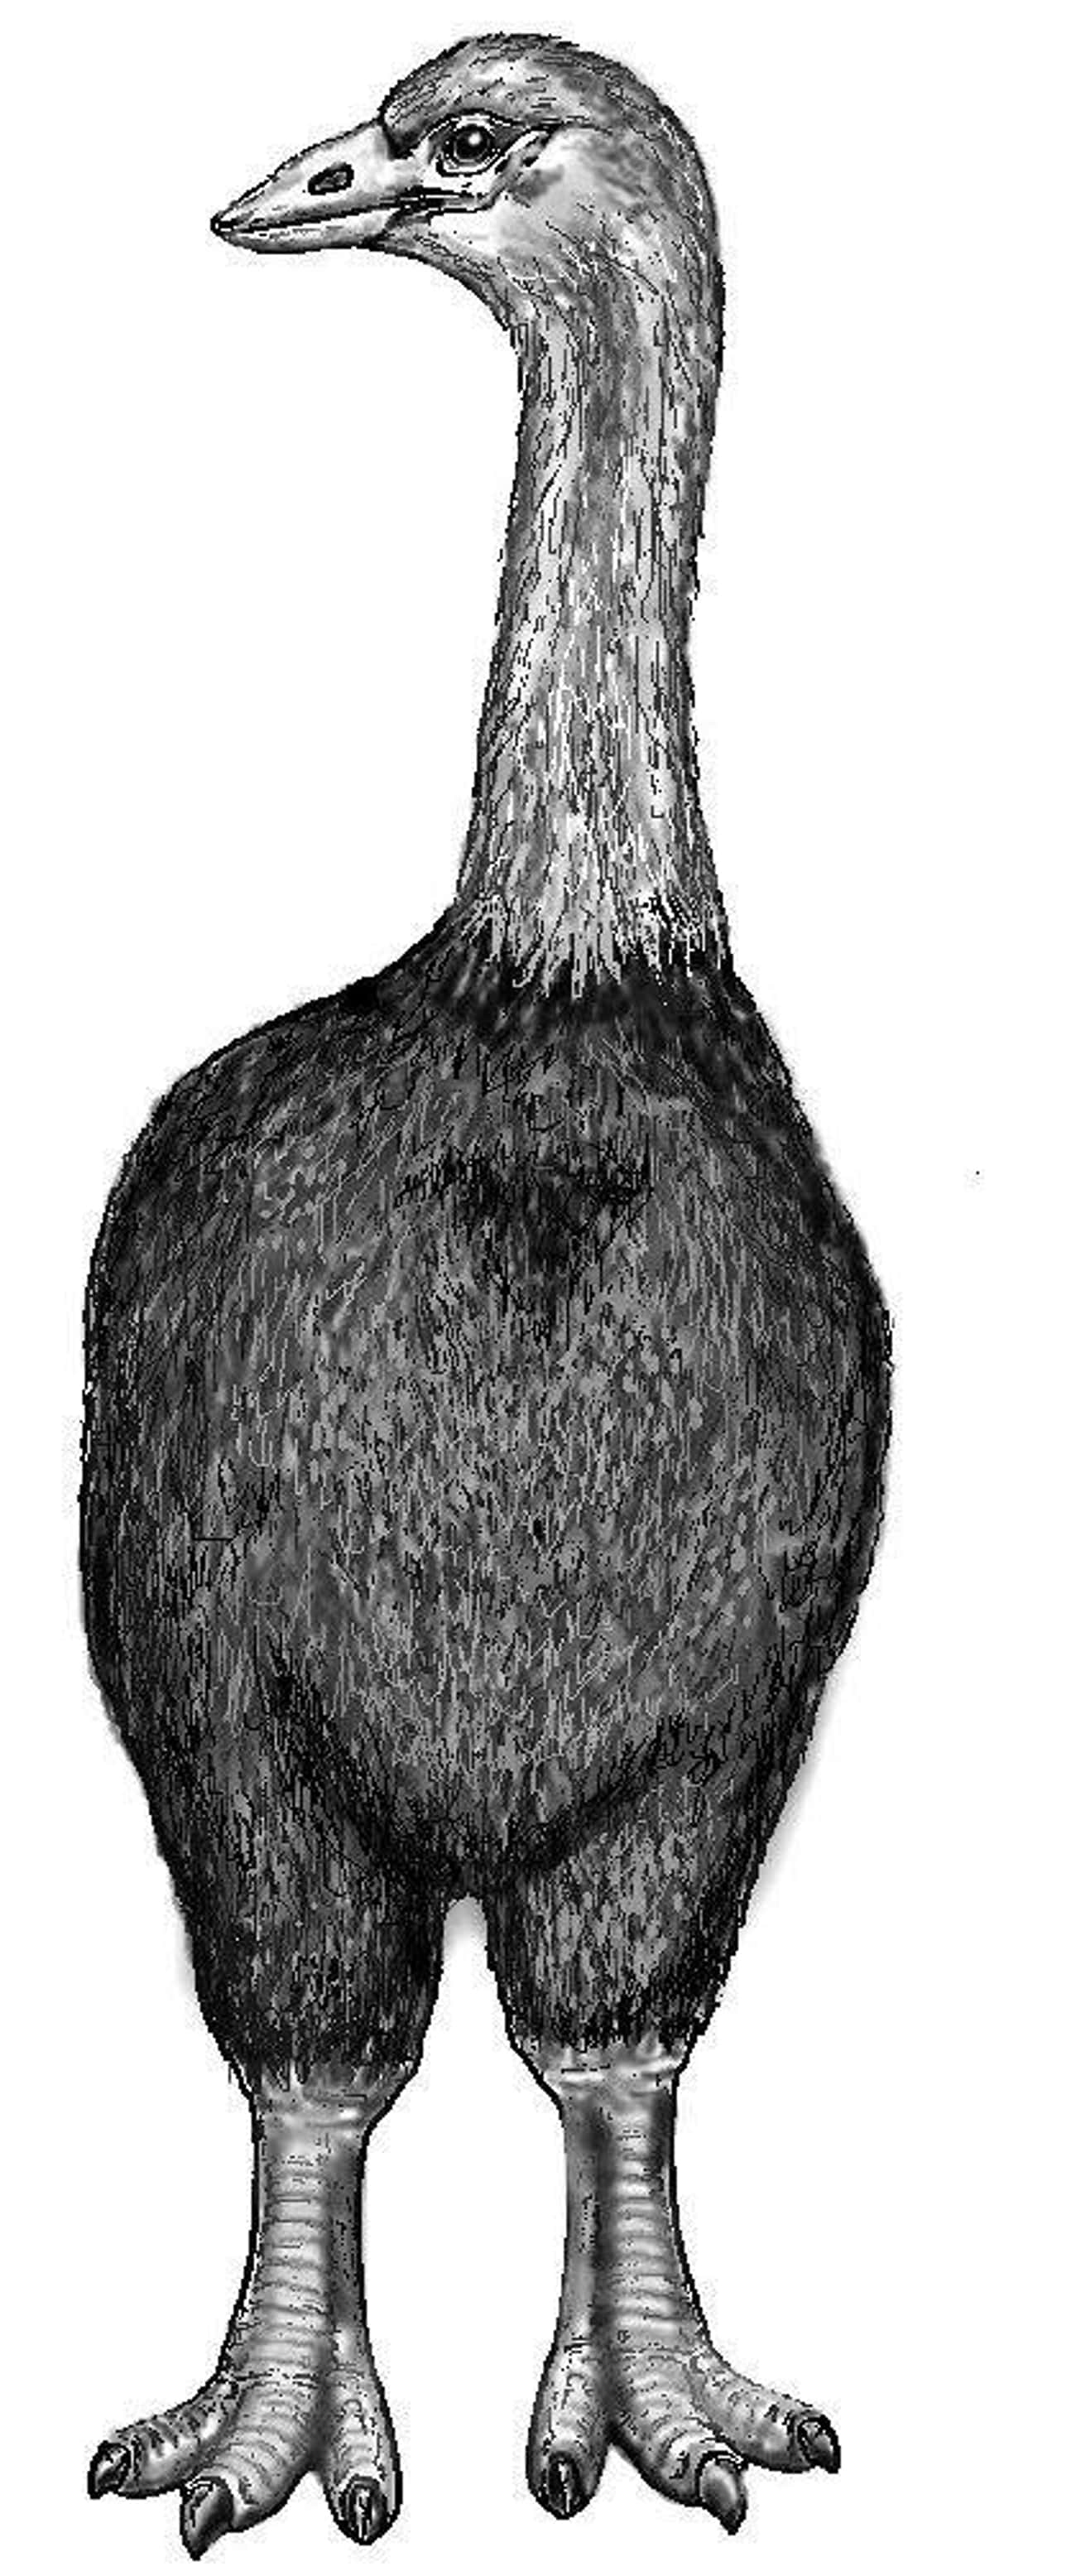 Elephant bird. Эпиорнис мадагаскарский. Эпиорнис Aepyornithidae. Фороракос Эпиорнис. Эпиорнис Максимус.